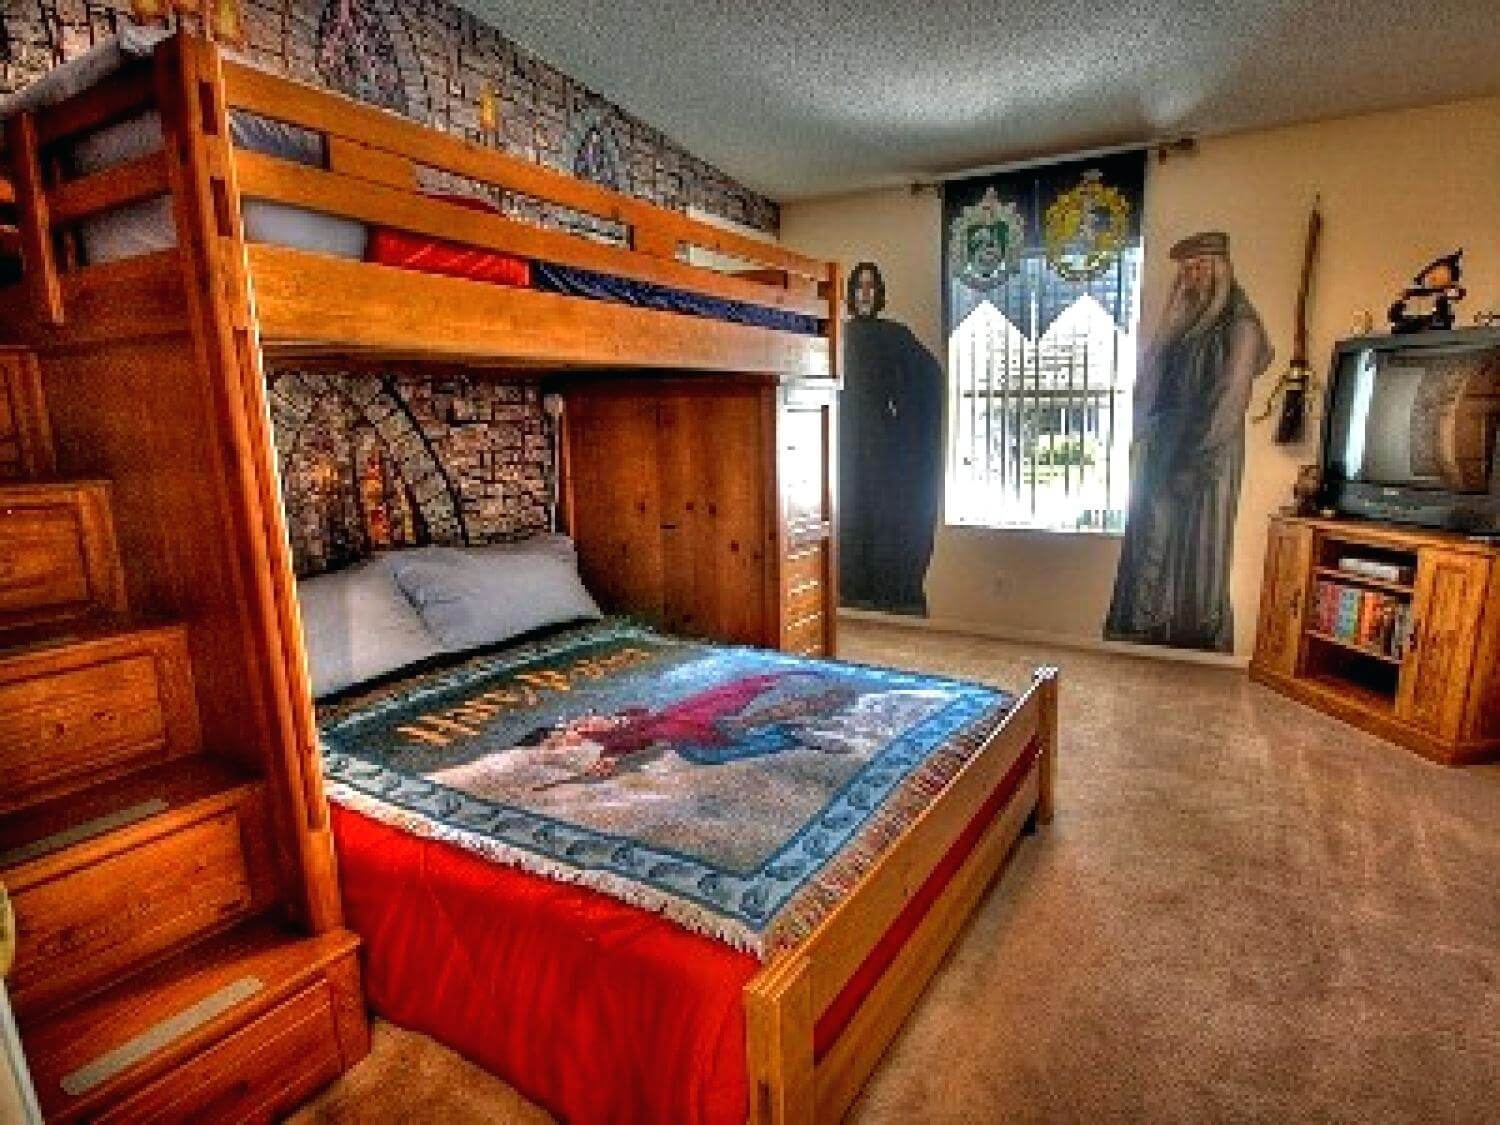 Adorable Harry Potter bedroom